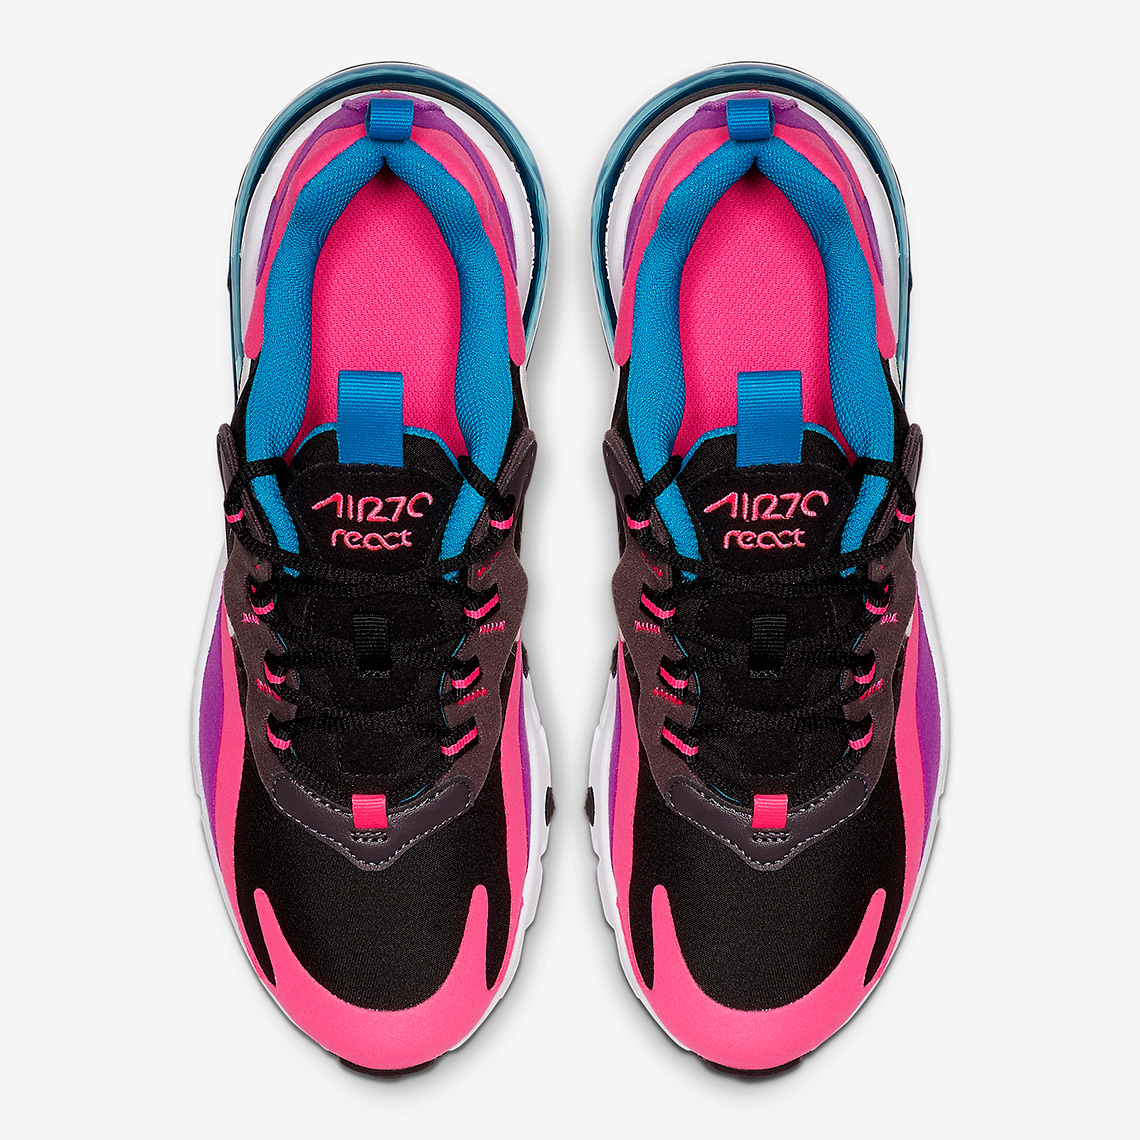 Nike Air Max 270 React Hyper Pink/Vivid Purple sneakers, £98.00